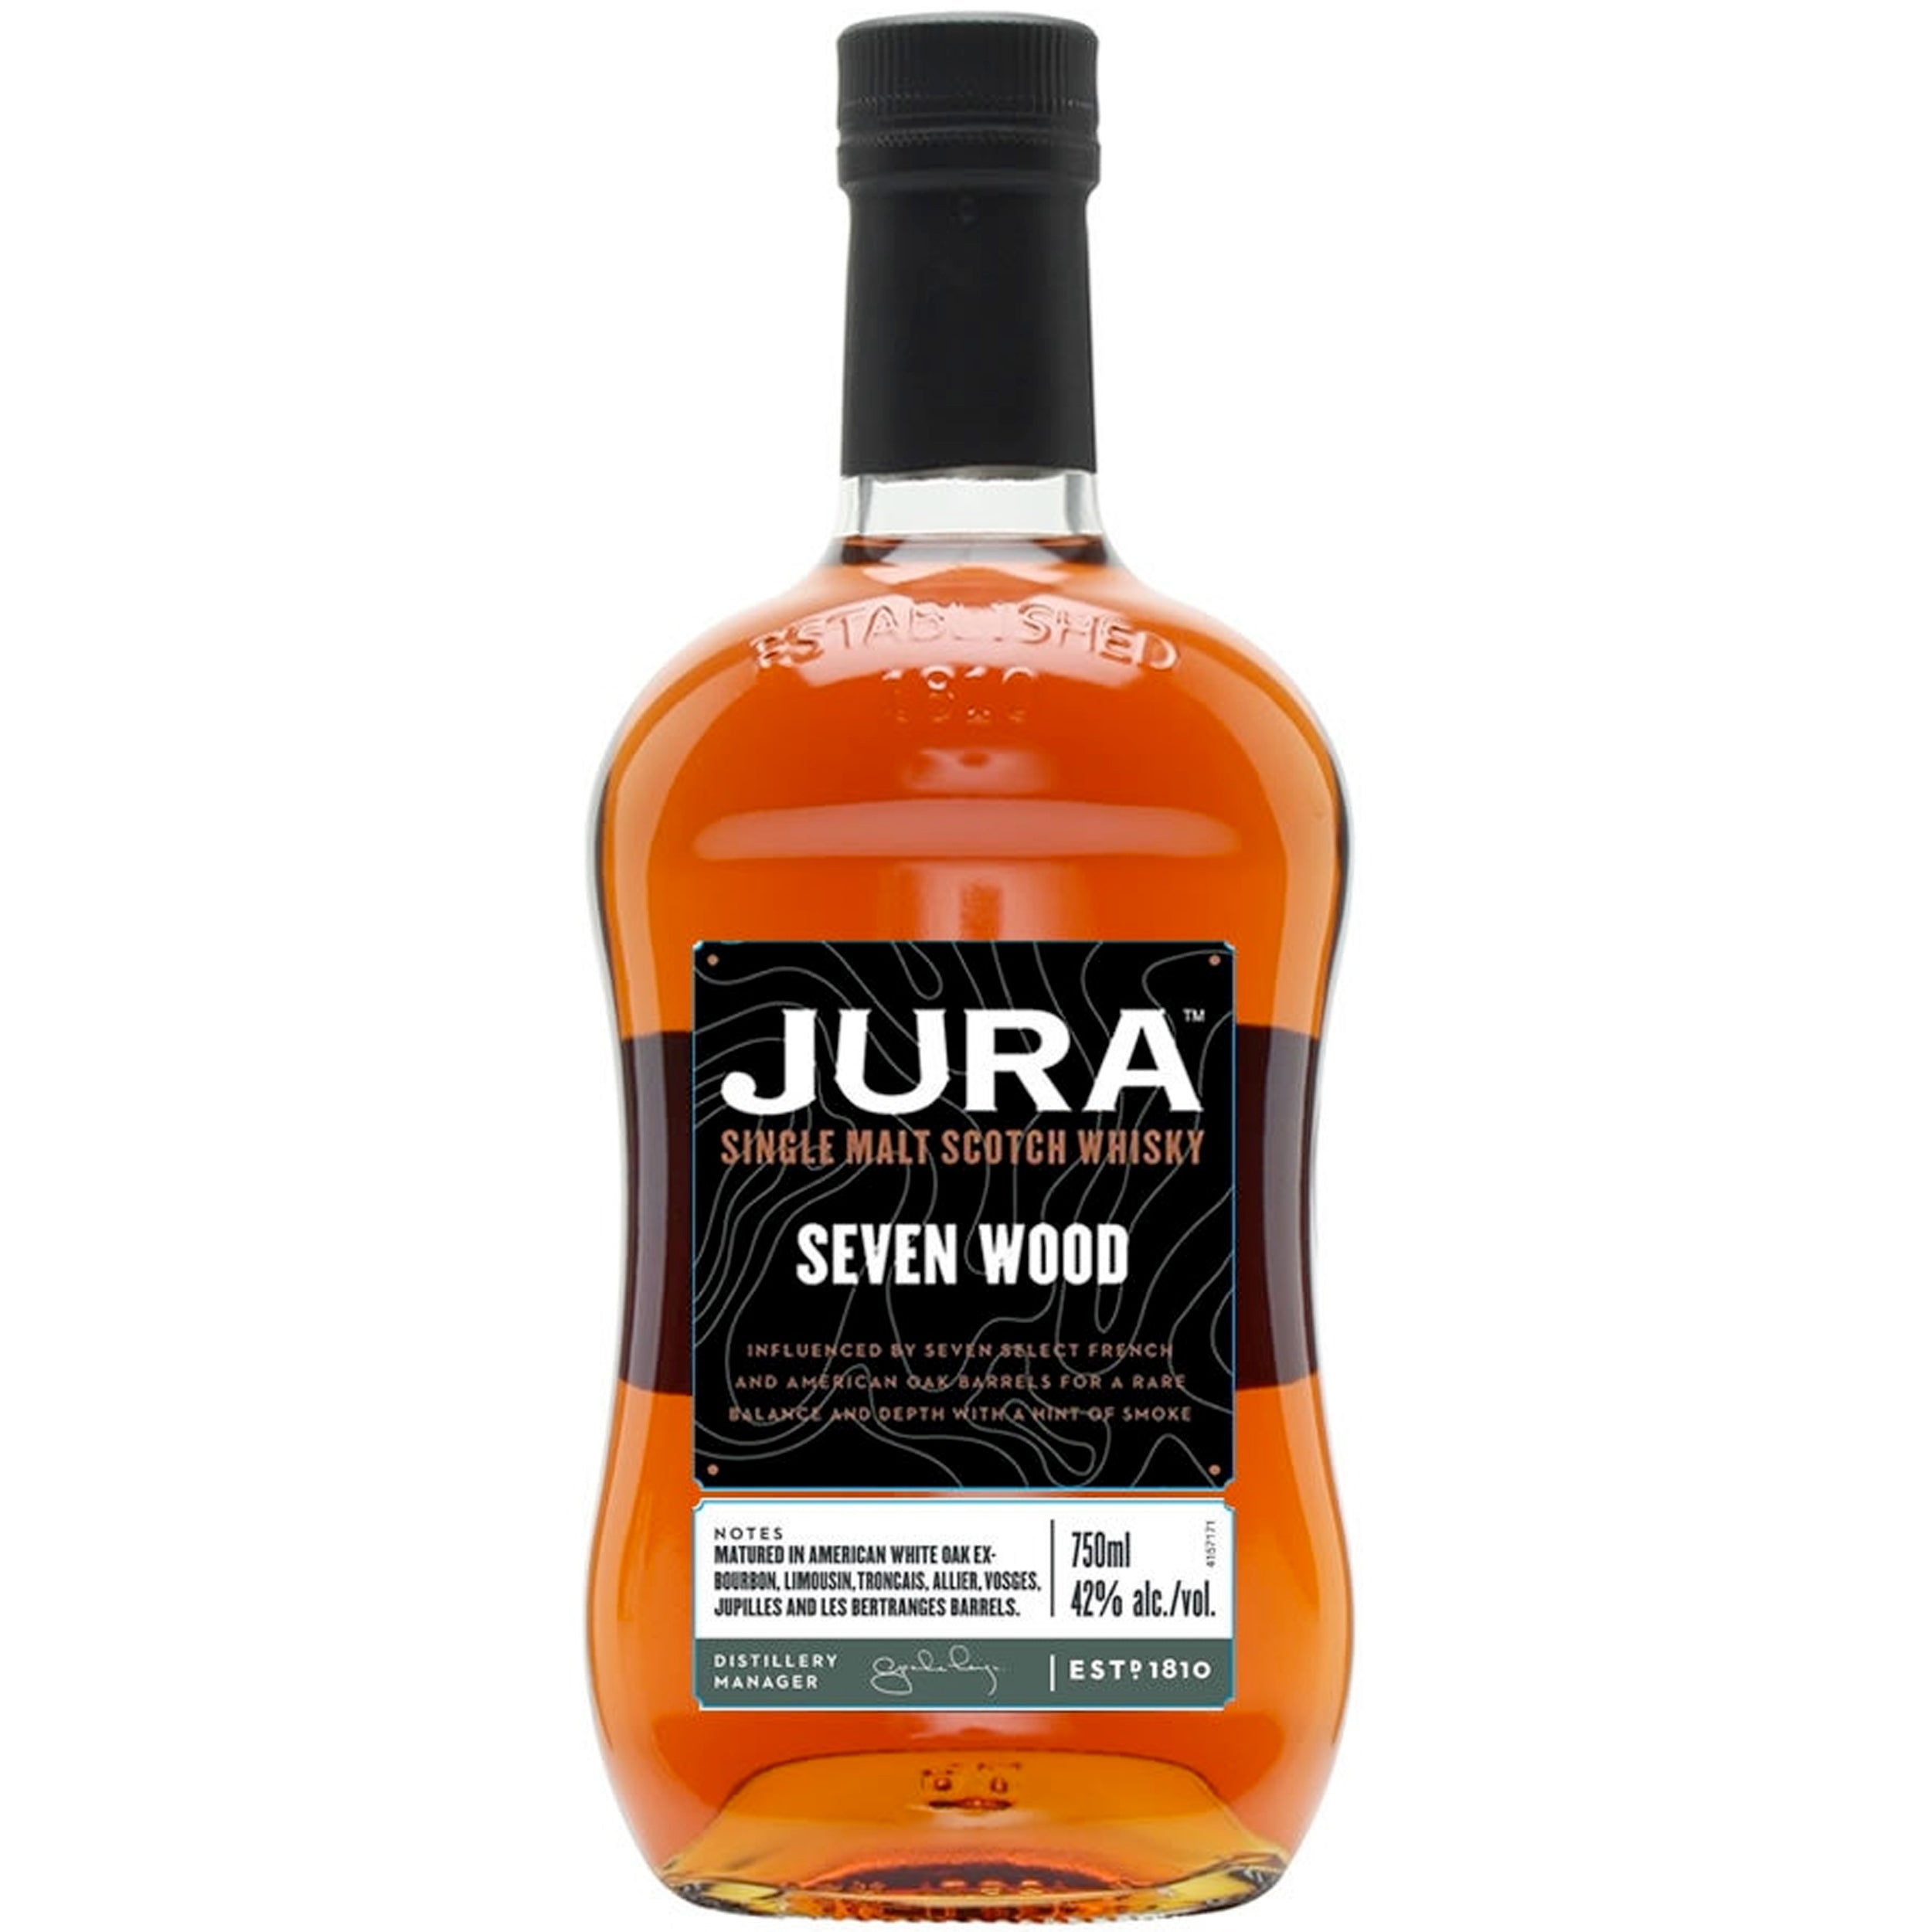 Jura Scotch Whisky Single Malt Seven Wood